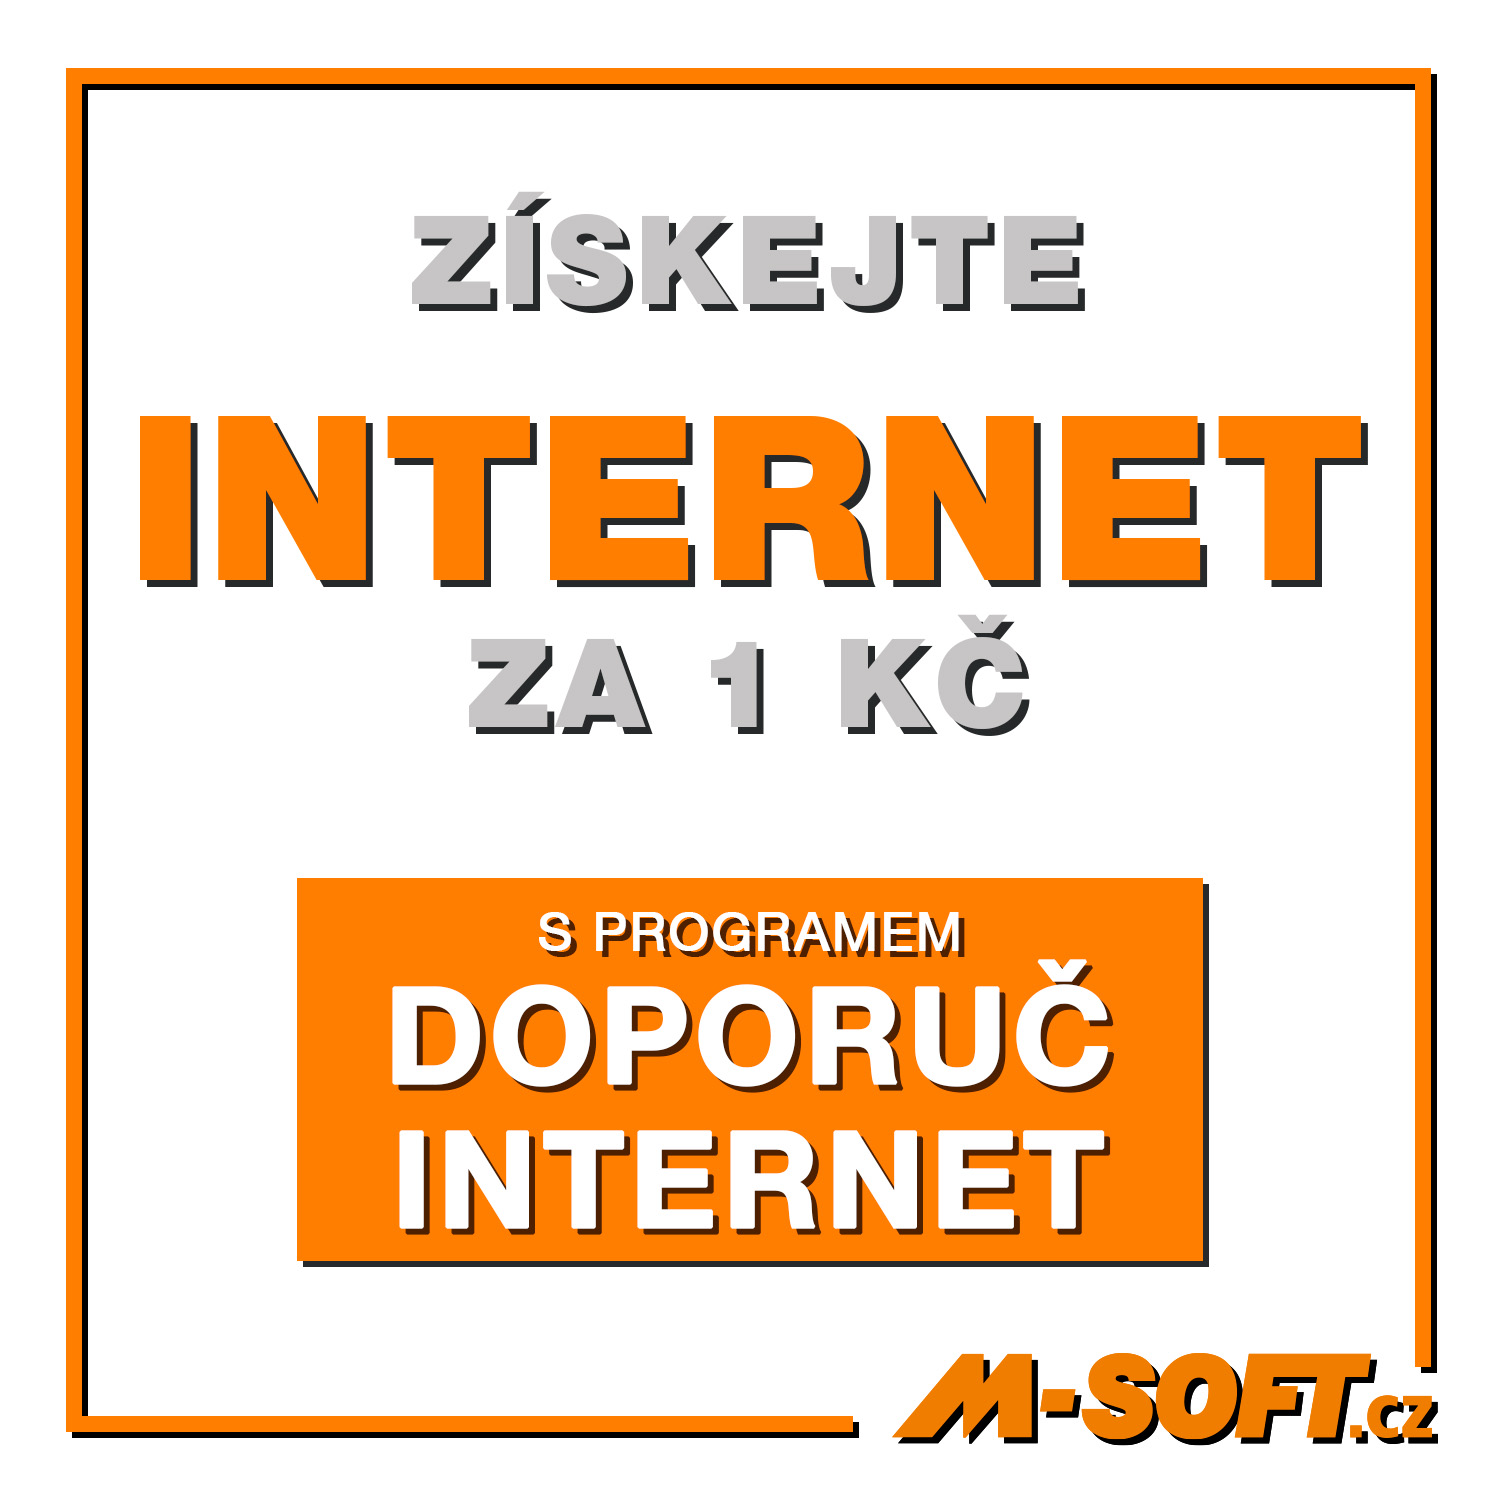 Doporuc_Internet_za 1kc_IG_2